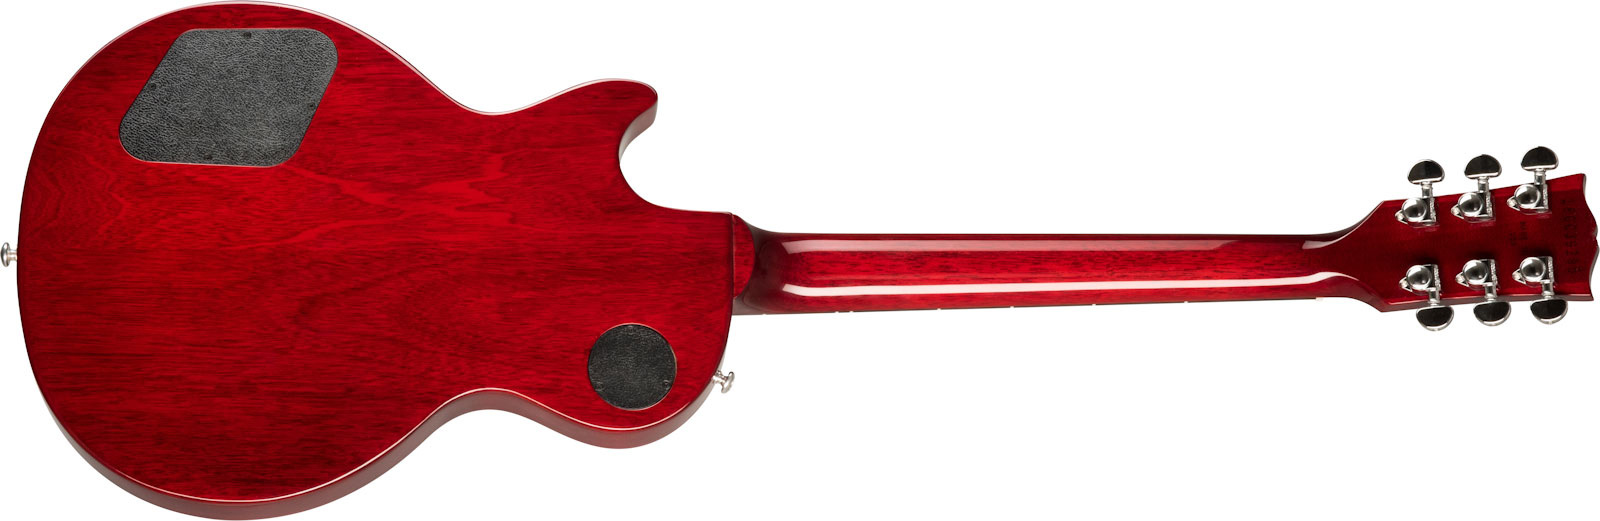 Gibson Les Paul Studio Modern 2019 2h Ht Rw - Wine Red - Enkel gesneden elektrische gitaar - Variation 1